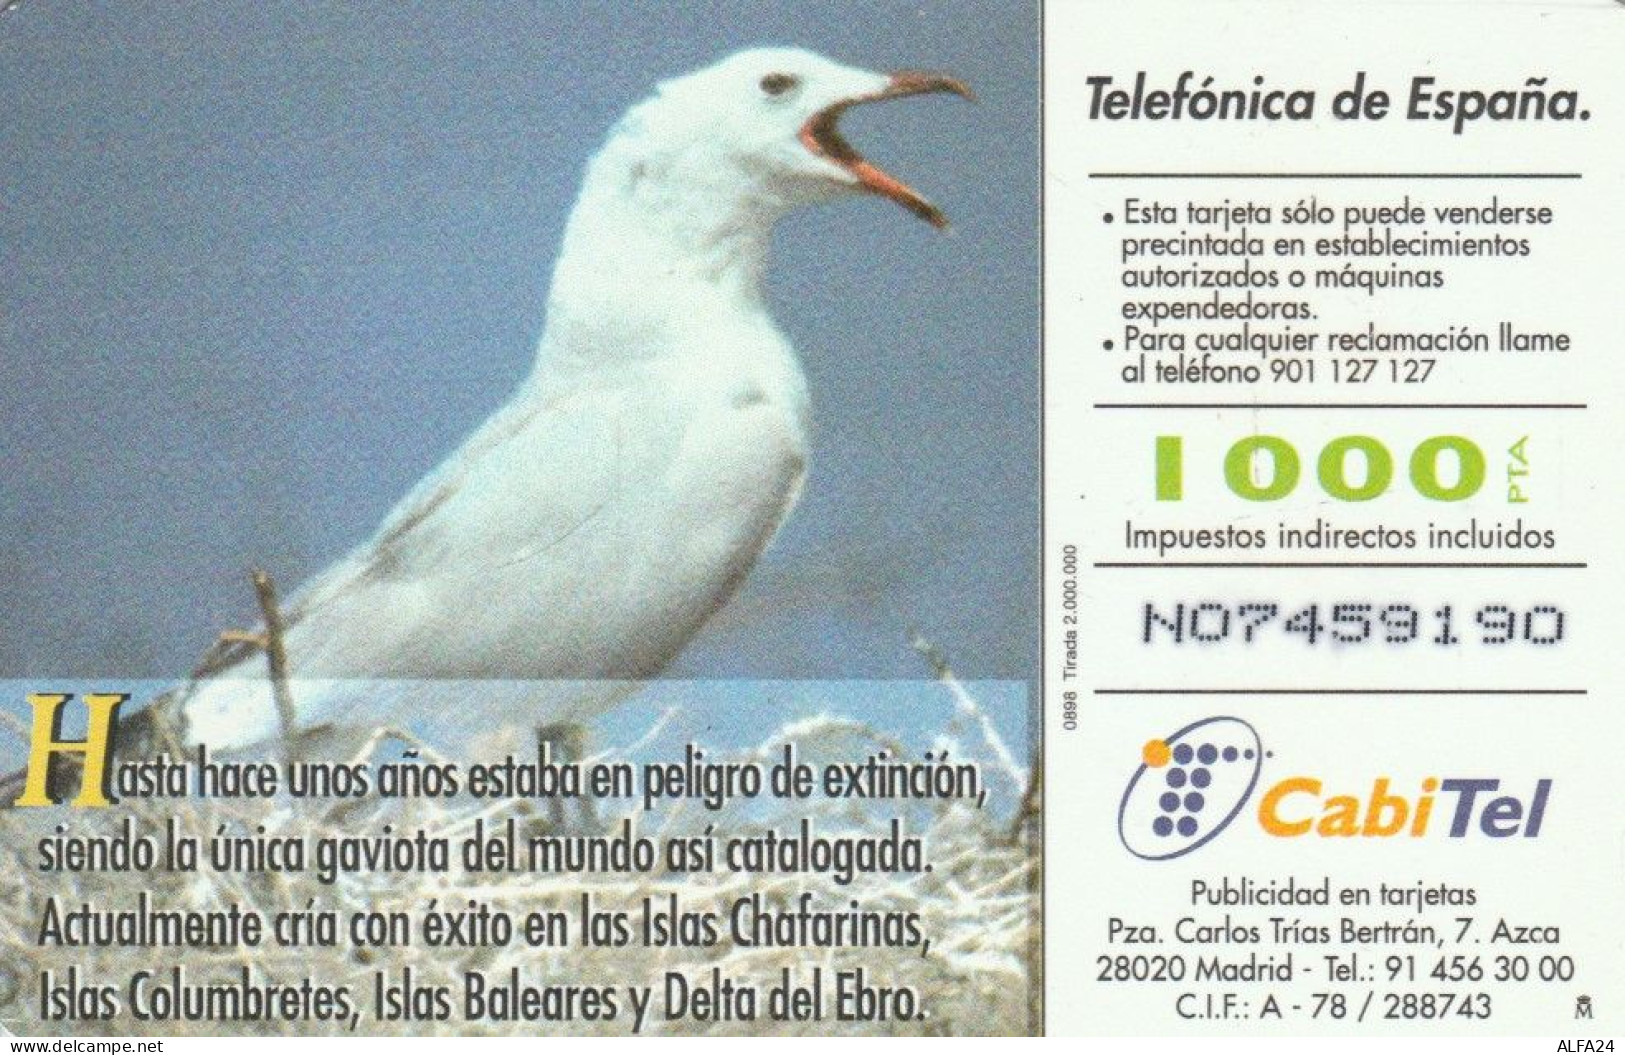 PHONE CARD SPAGNA FAUNA IBERICA (CK7075 - Emissions Basiques